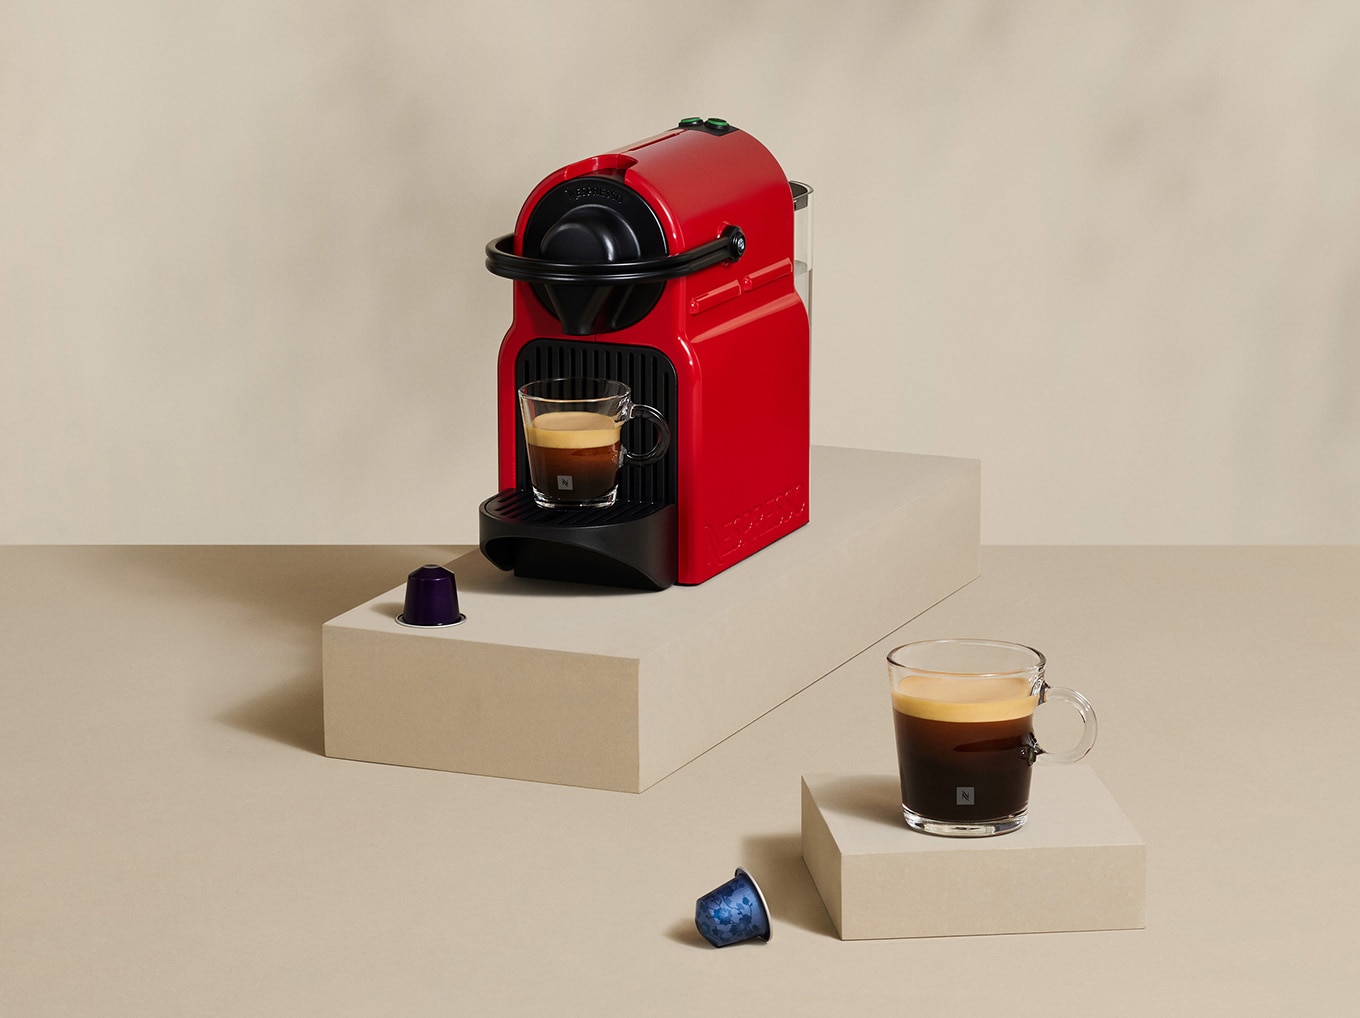 Save $100 on a Nespresso Inissia espresso maker and Aerocinno milk frother  bundle